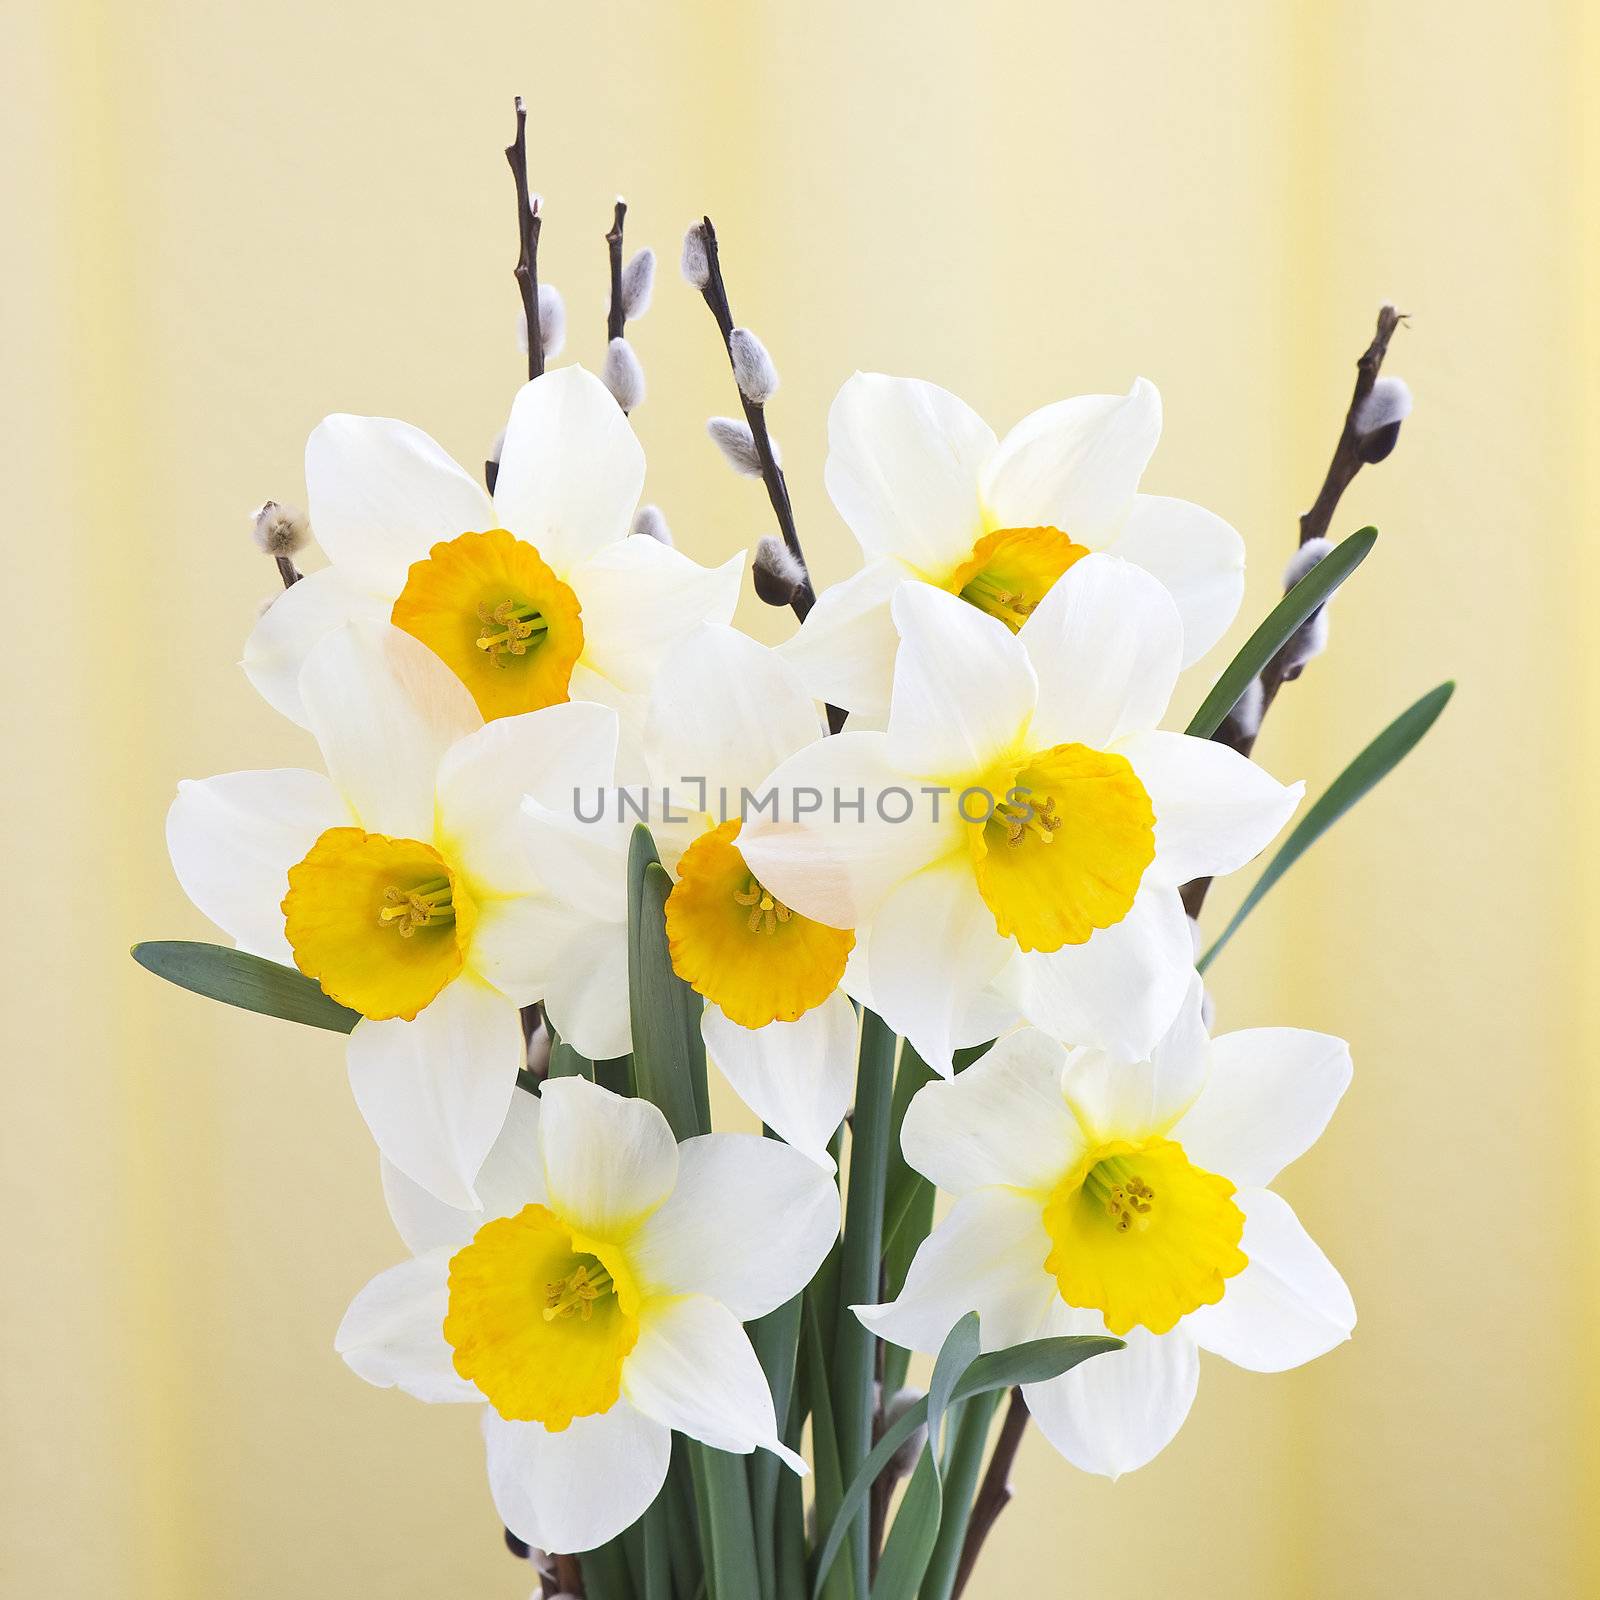 narcissus bouquet  by miradrozdowski